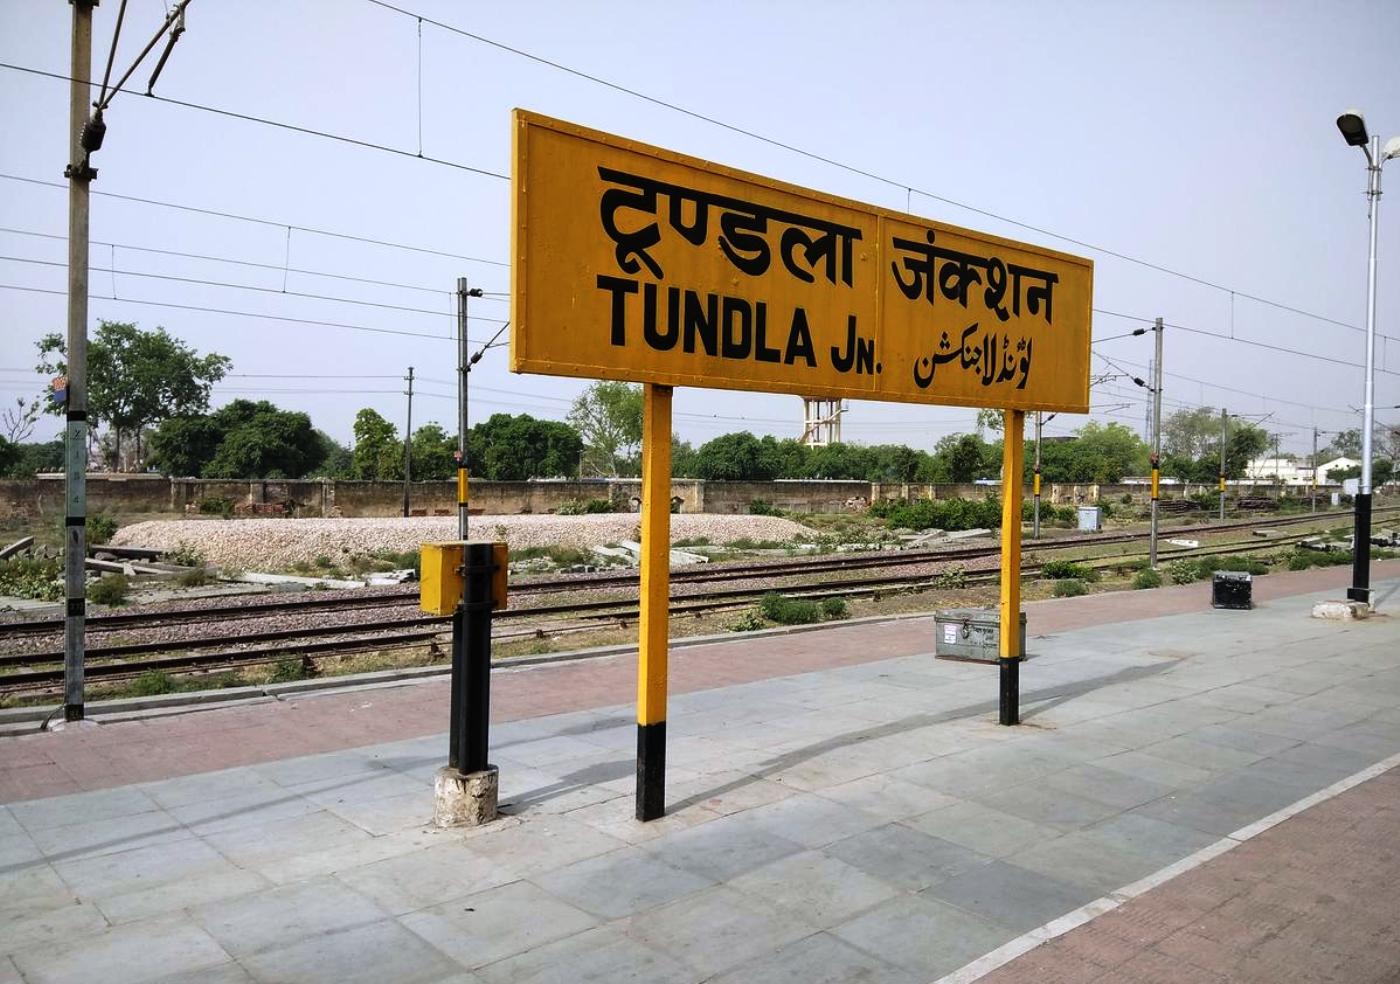 Tundla Junction